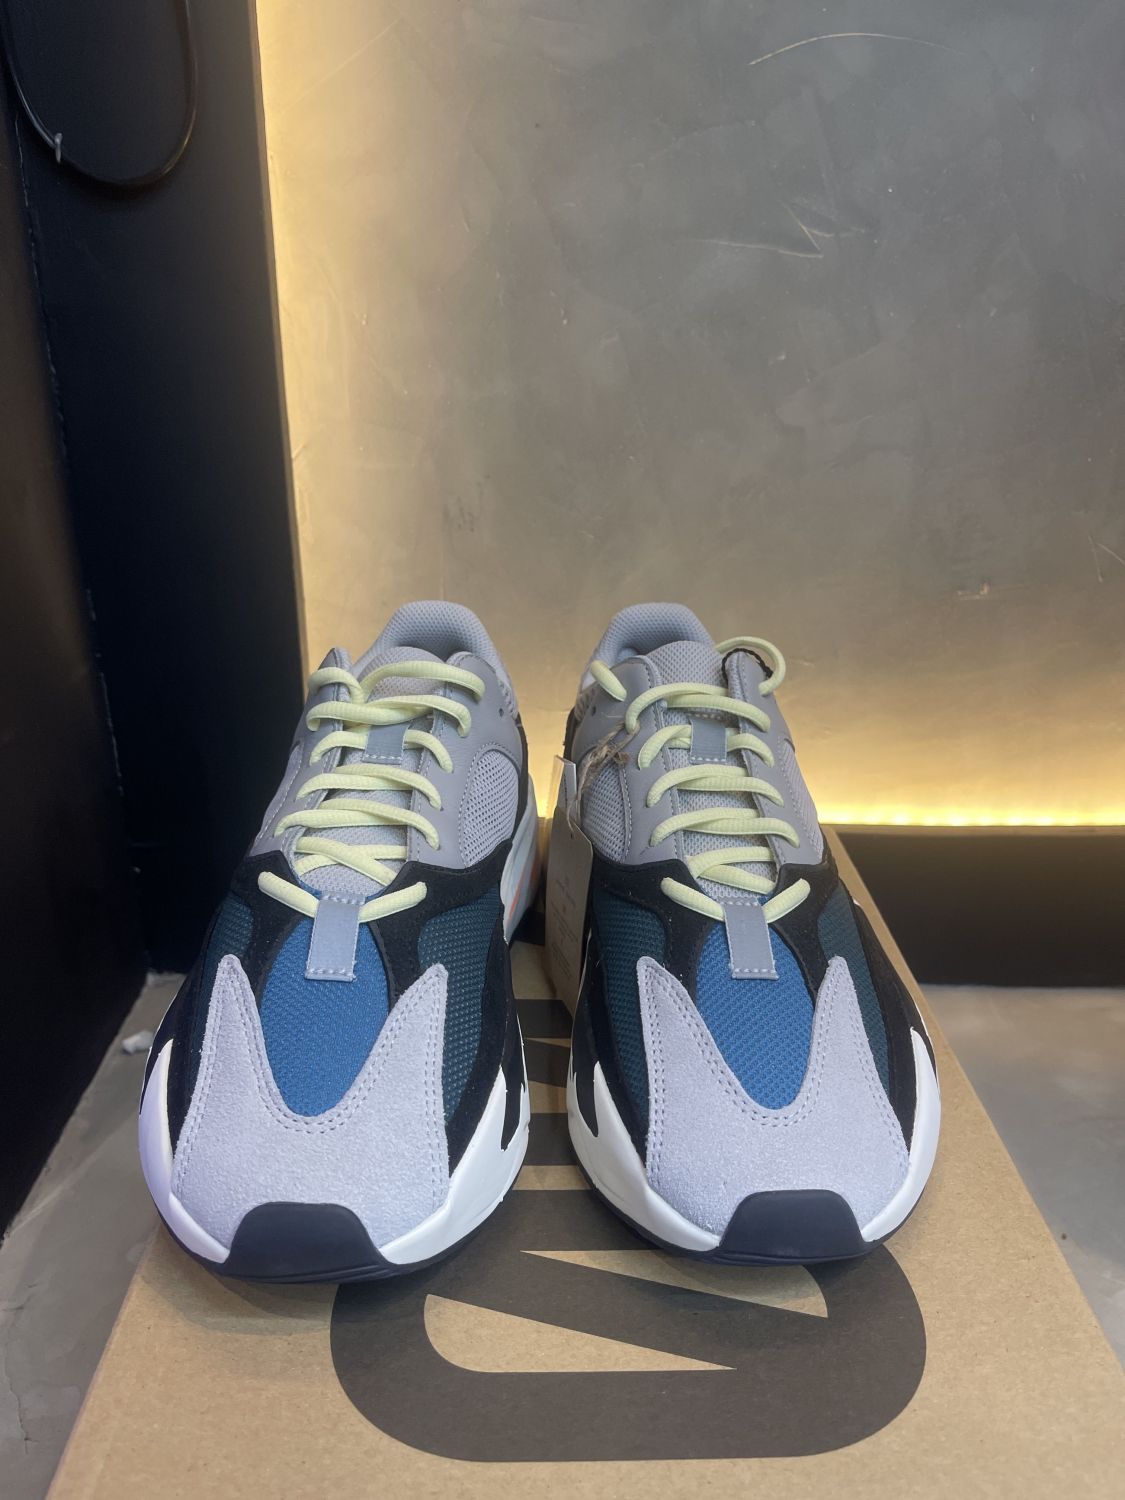 50 - adidas Yeezy Wave Runner Item Details - Secret Sneaker Store